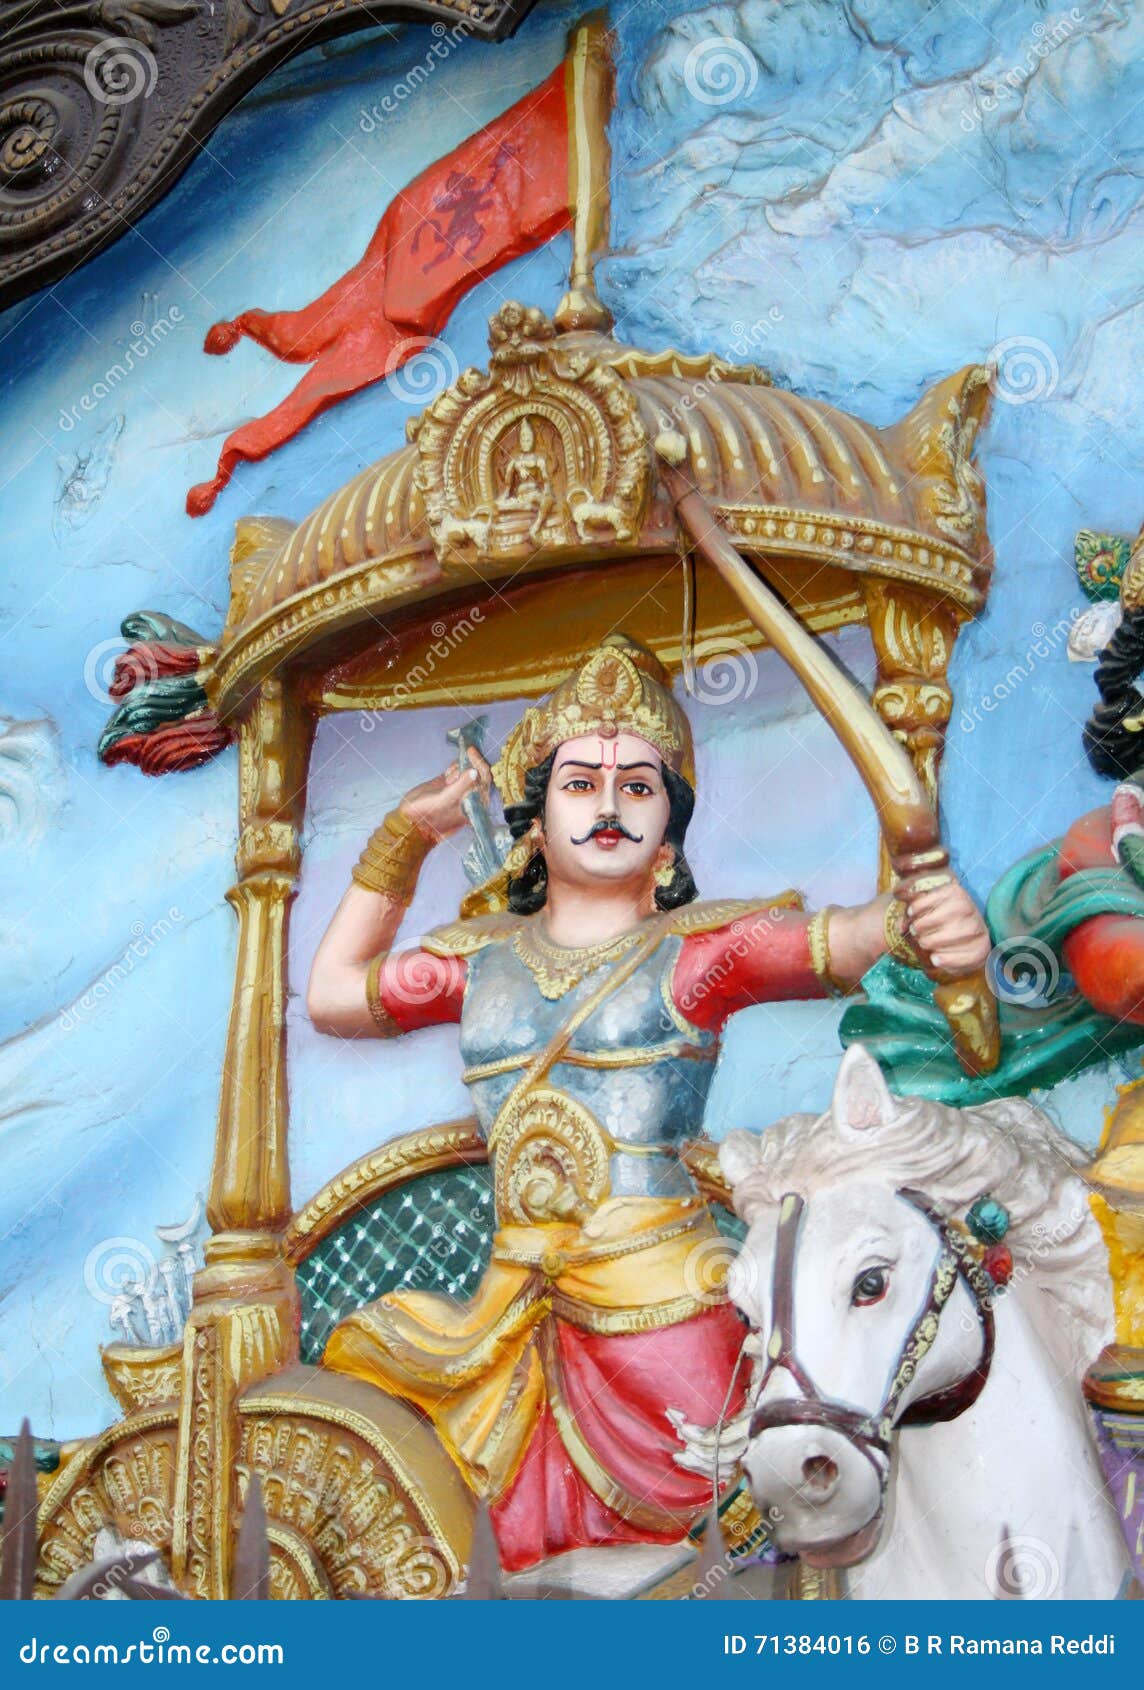 Wall Art Of Hindu God Arjun On Chariot As In Mahabharat War As In Epic